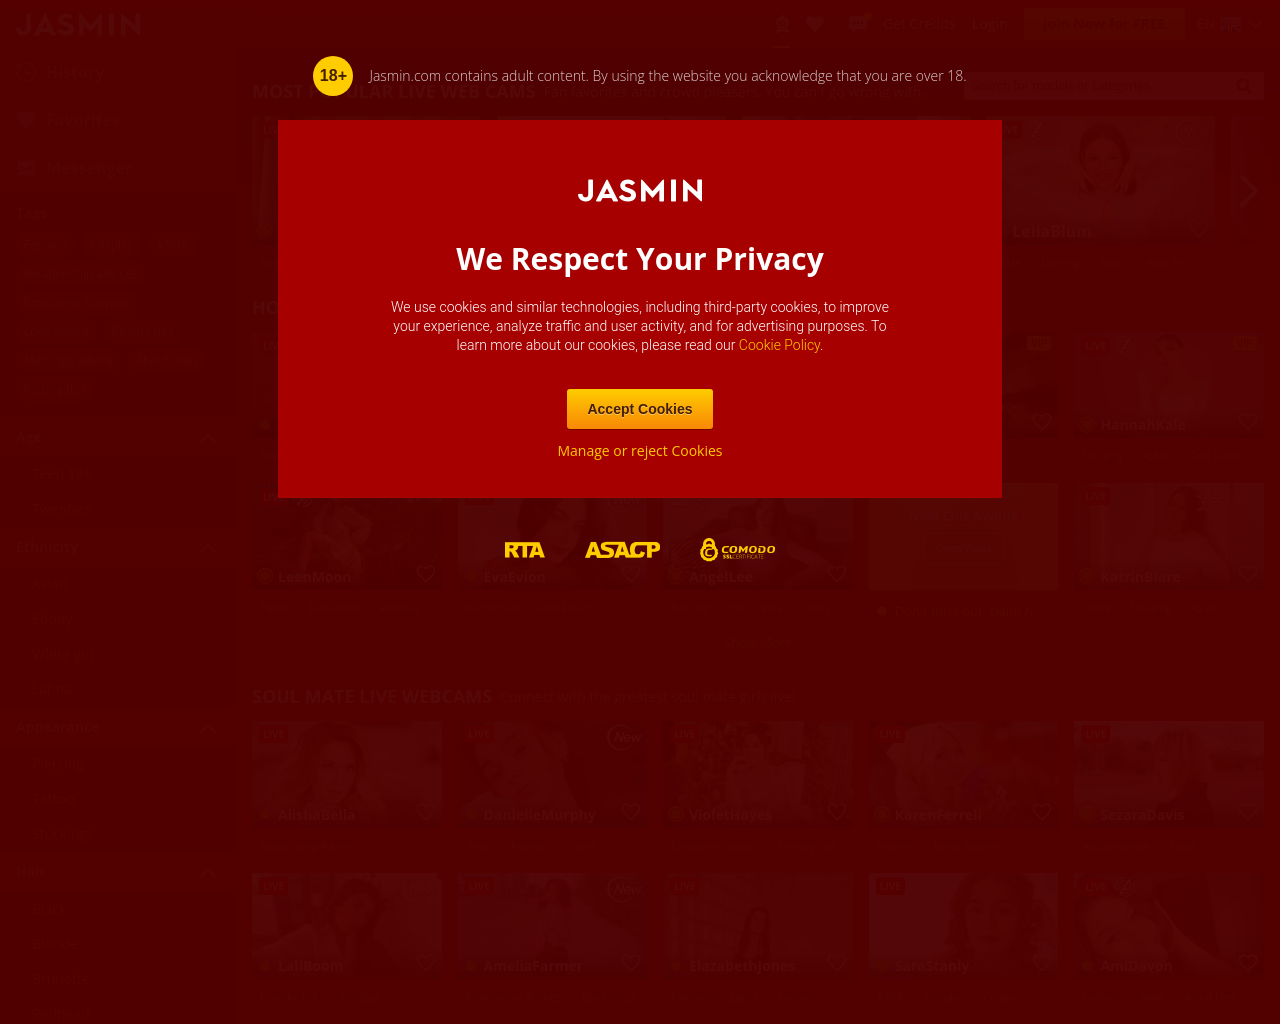 jasmin.com